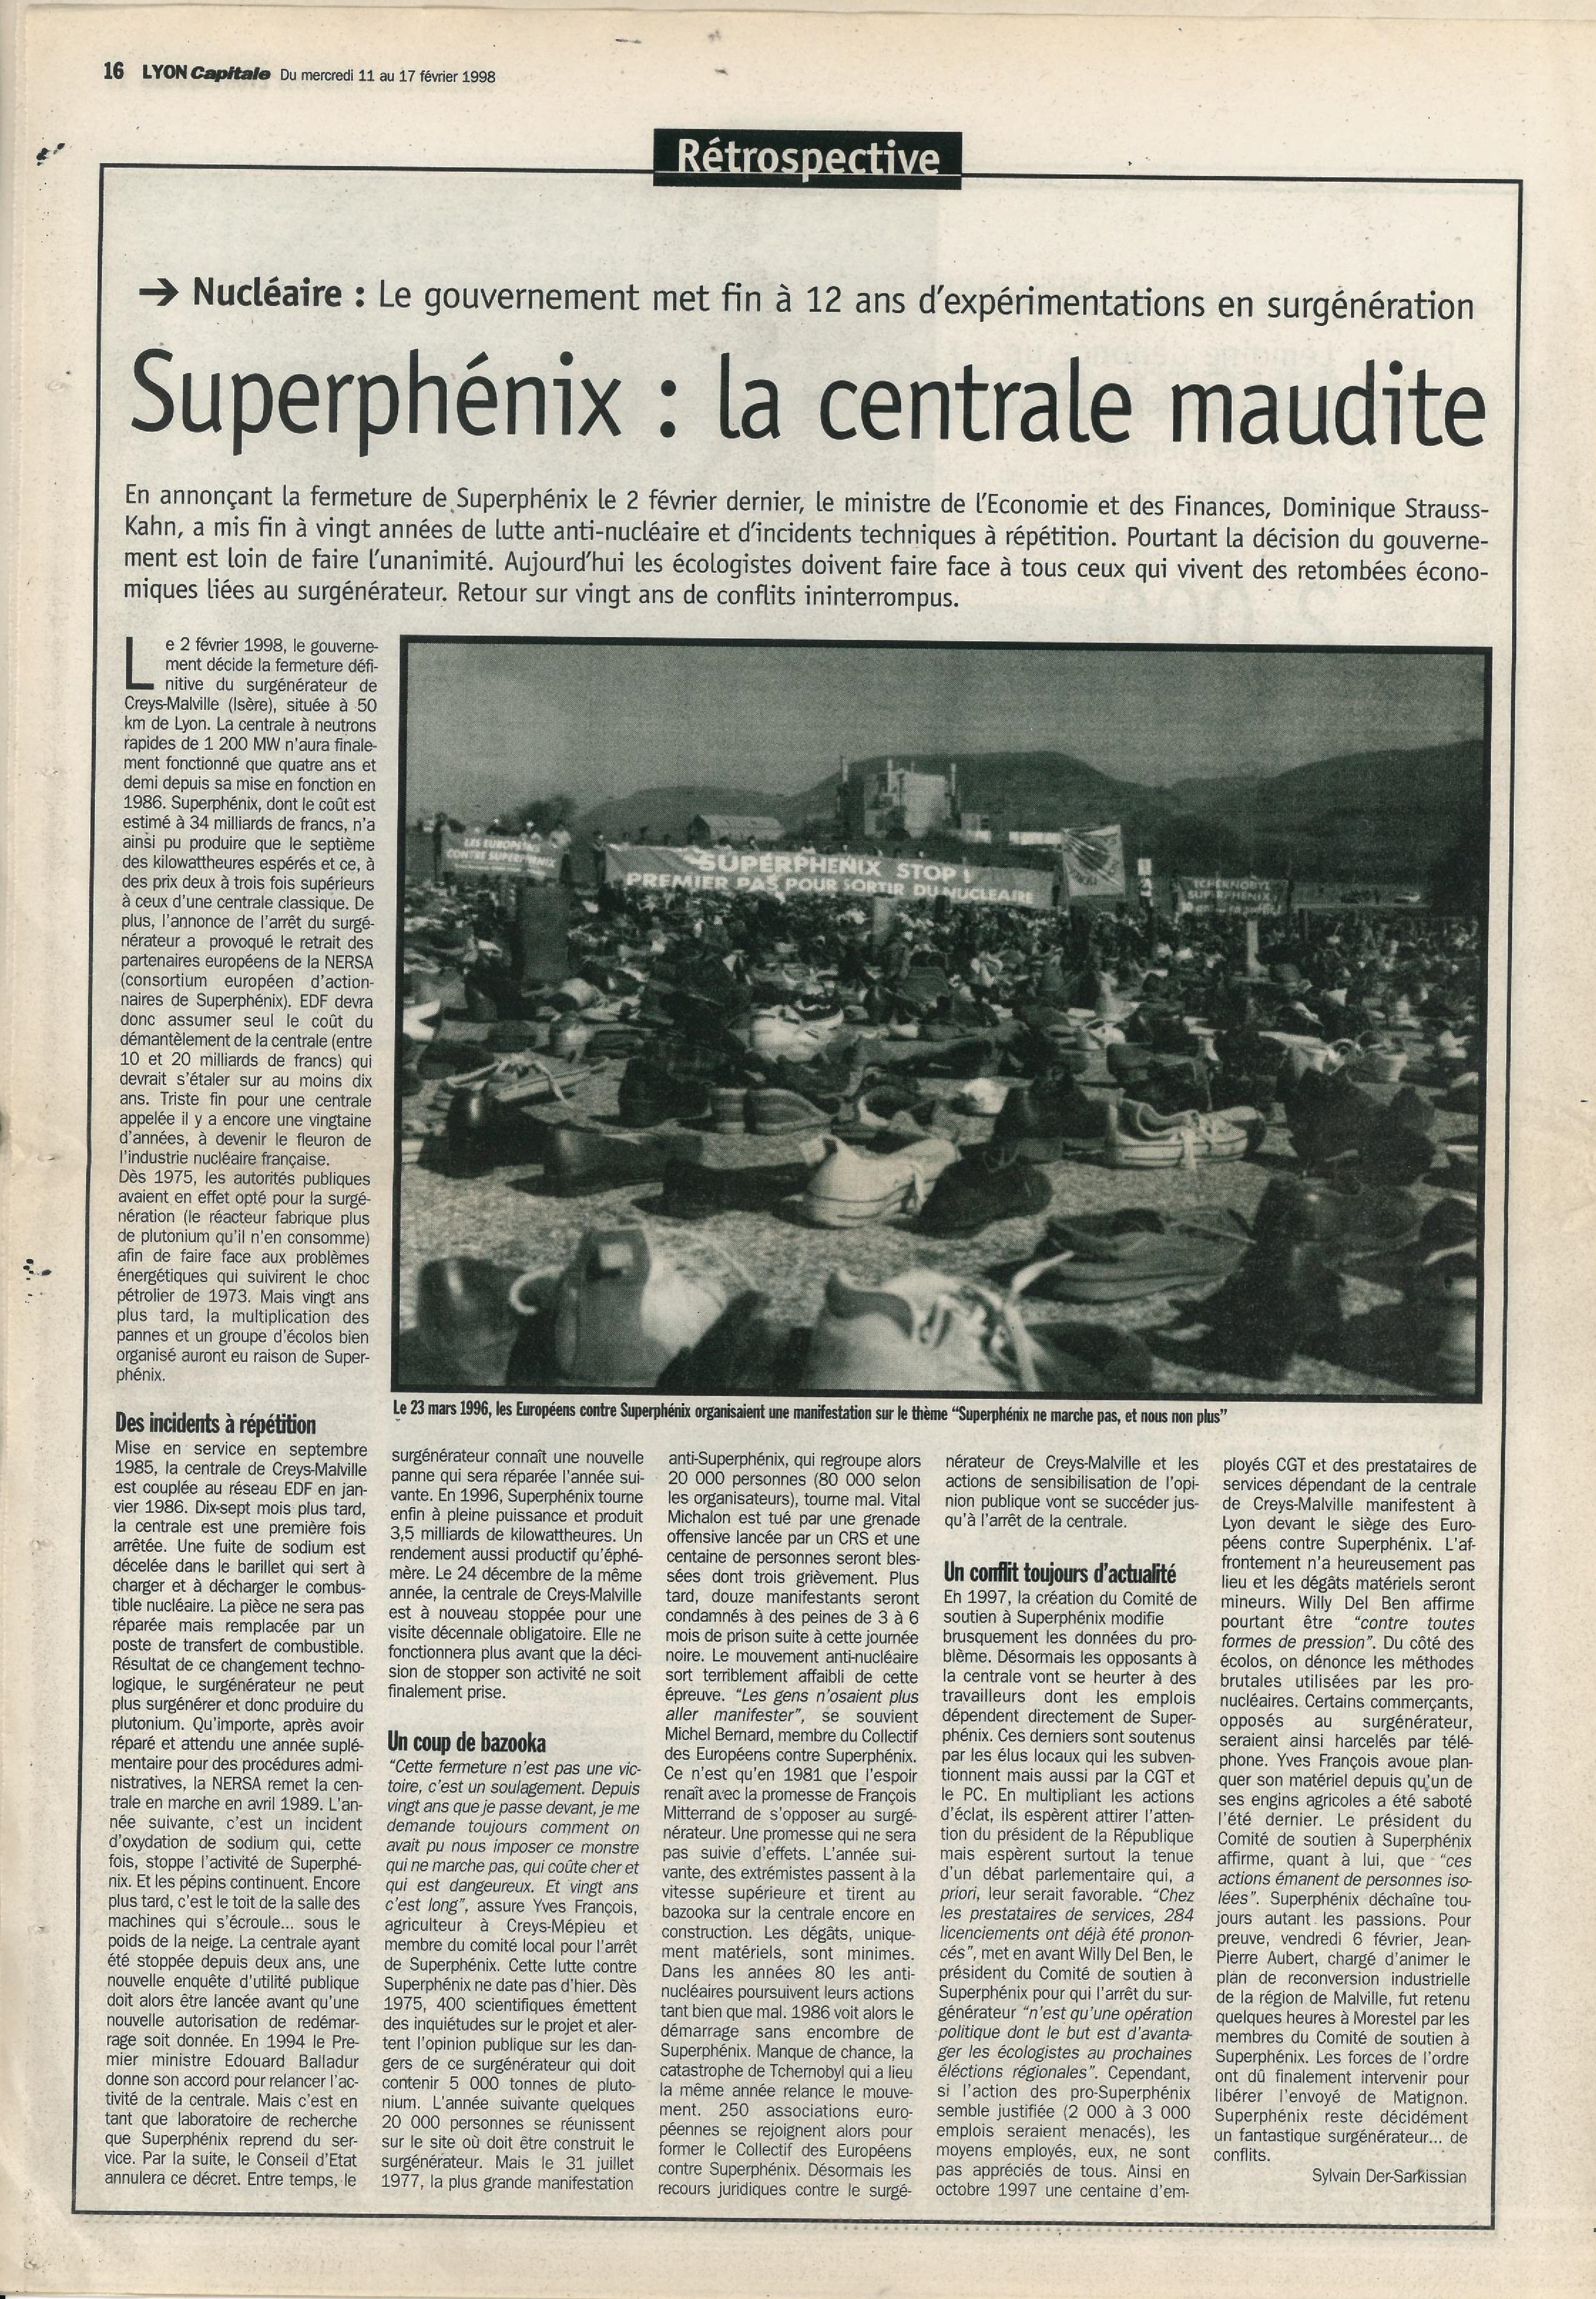 Lyon Capitale n°159, 11 janvier 1998, p. 16 © Lyon Capitale